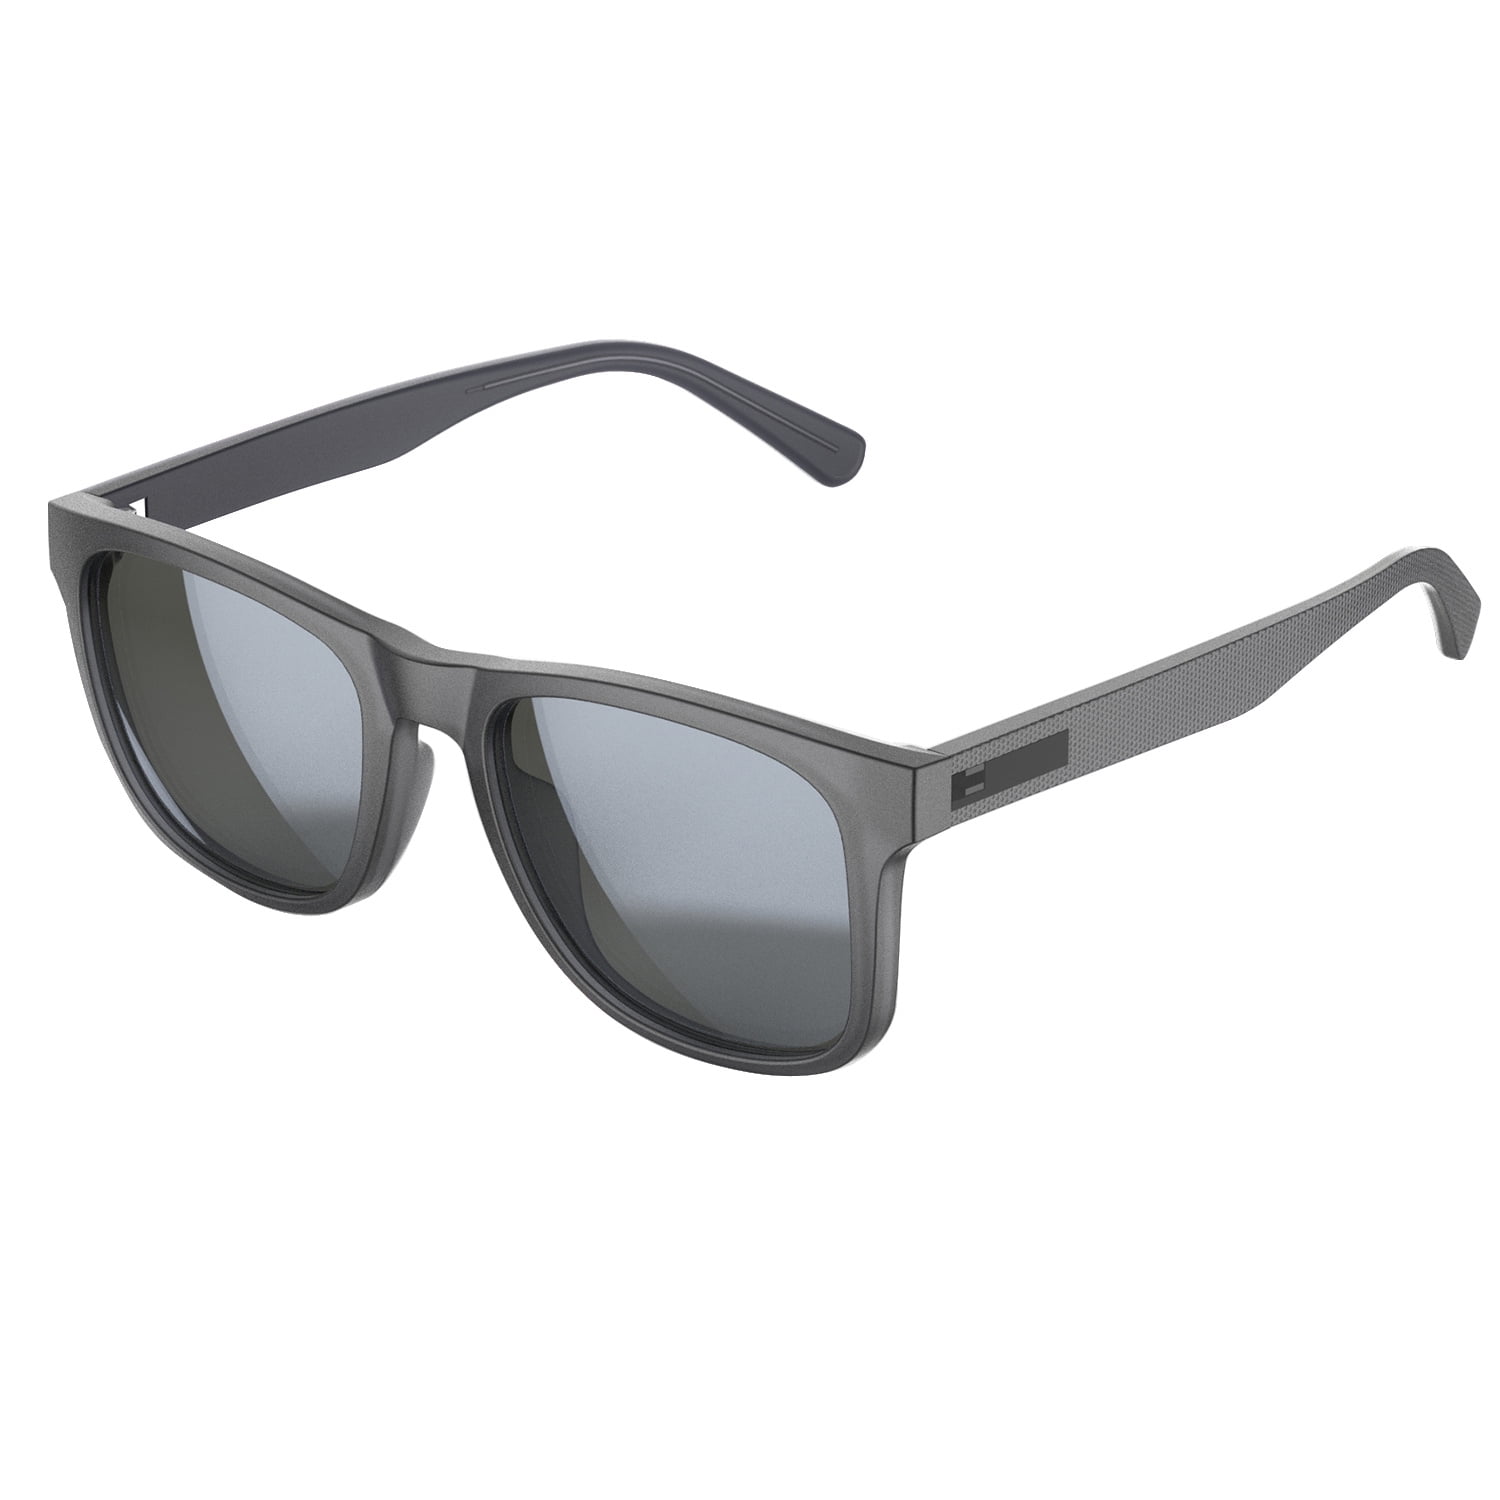 Sport Riding Unisex Sunglasses Mirrored Outdoor TR90 Frame Women Men S-116 